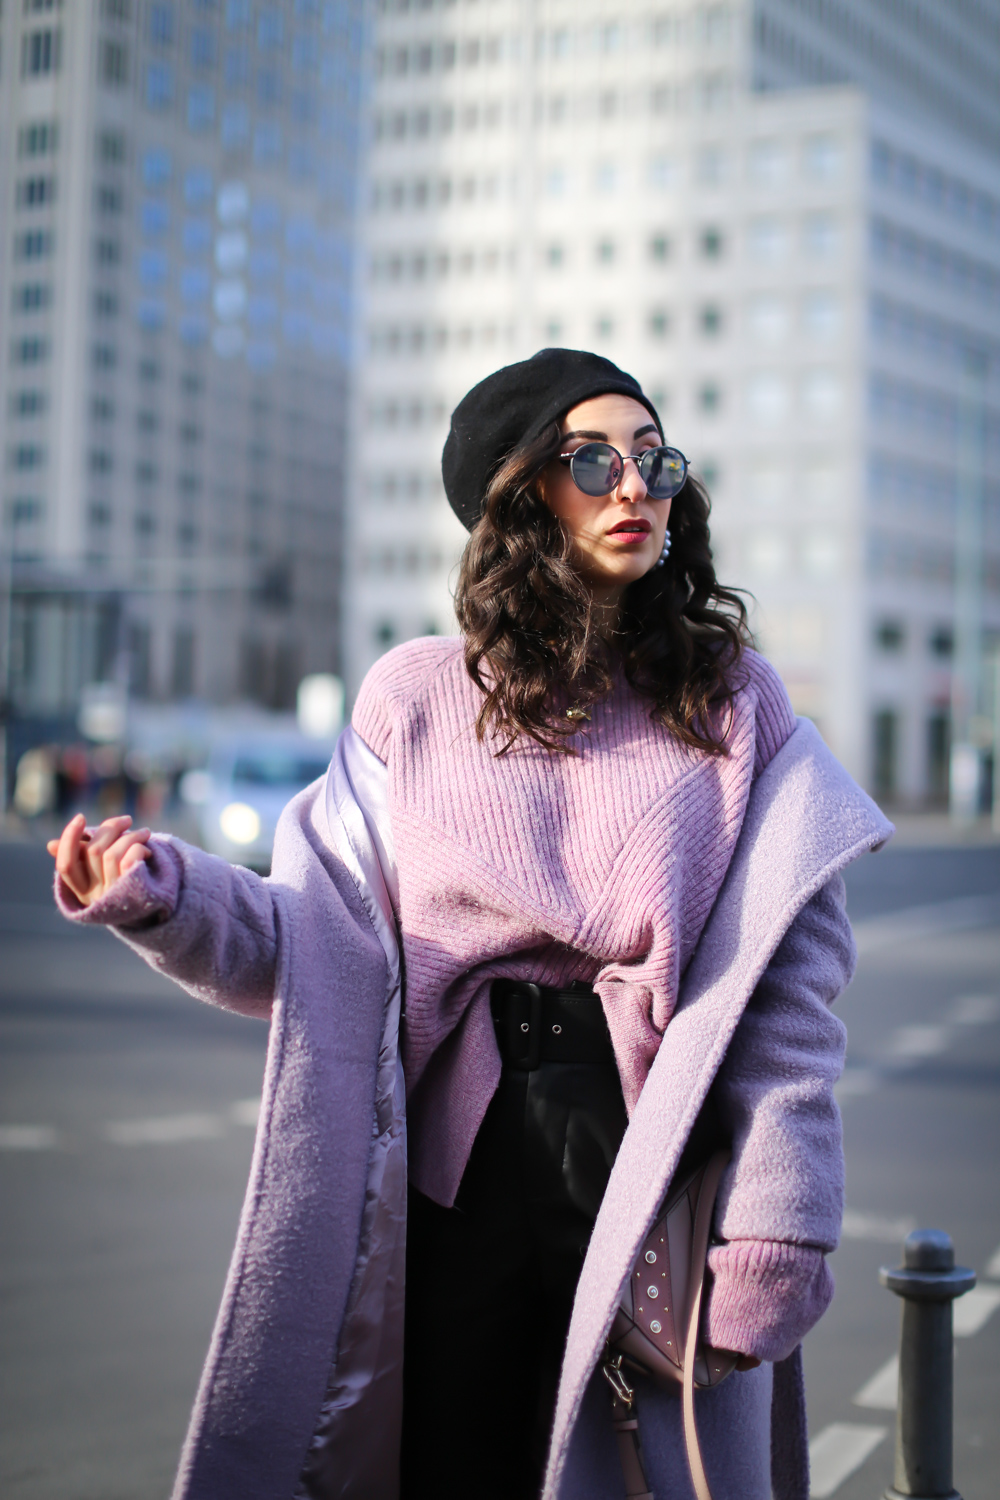 nakd purple coat leather pants winter outfit beret pink sweater weekday blogger winterlook samieze berlin potsdamer platz-7